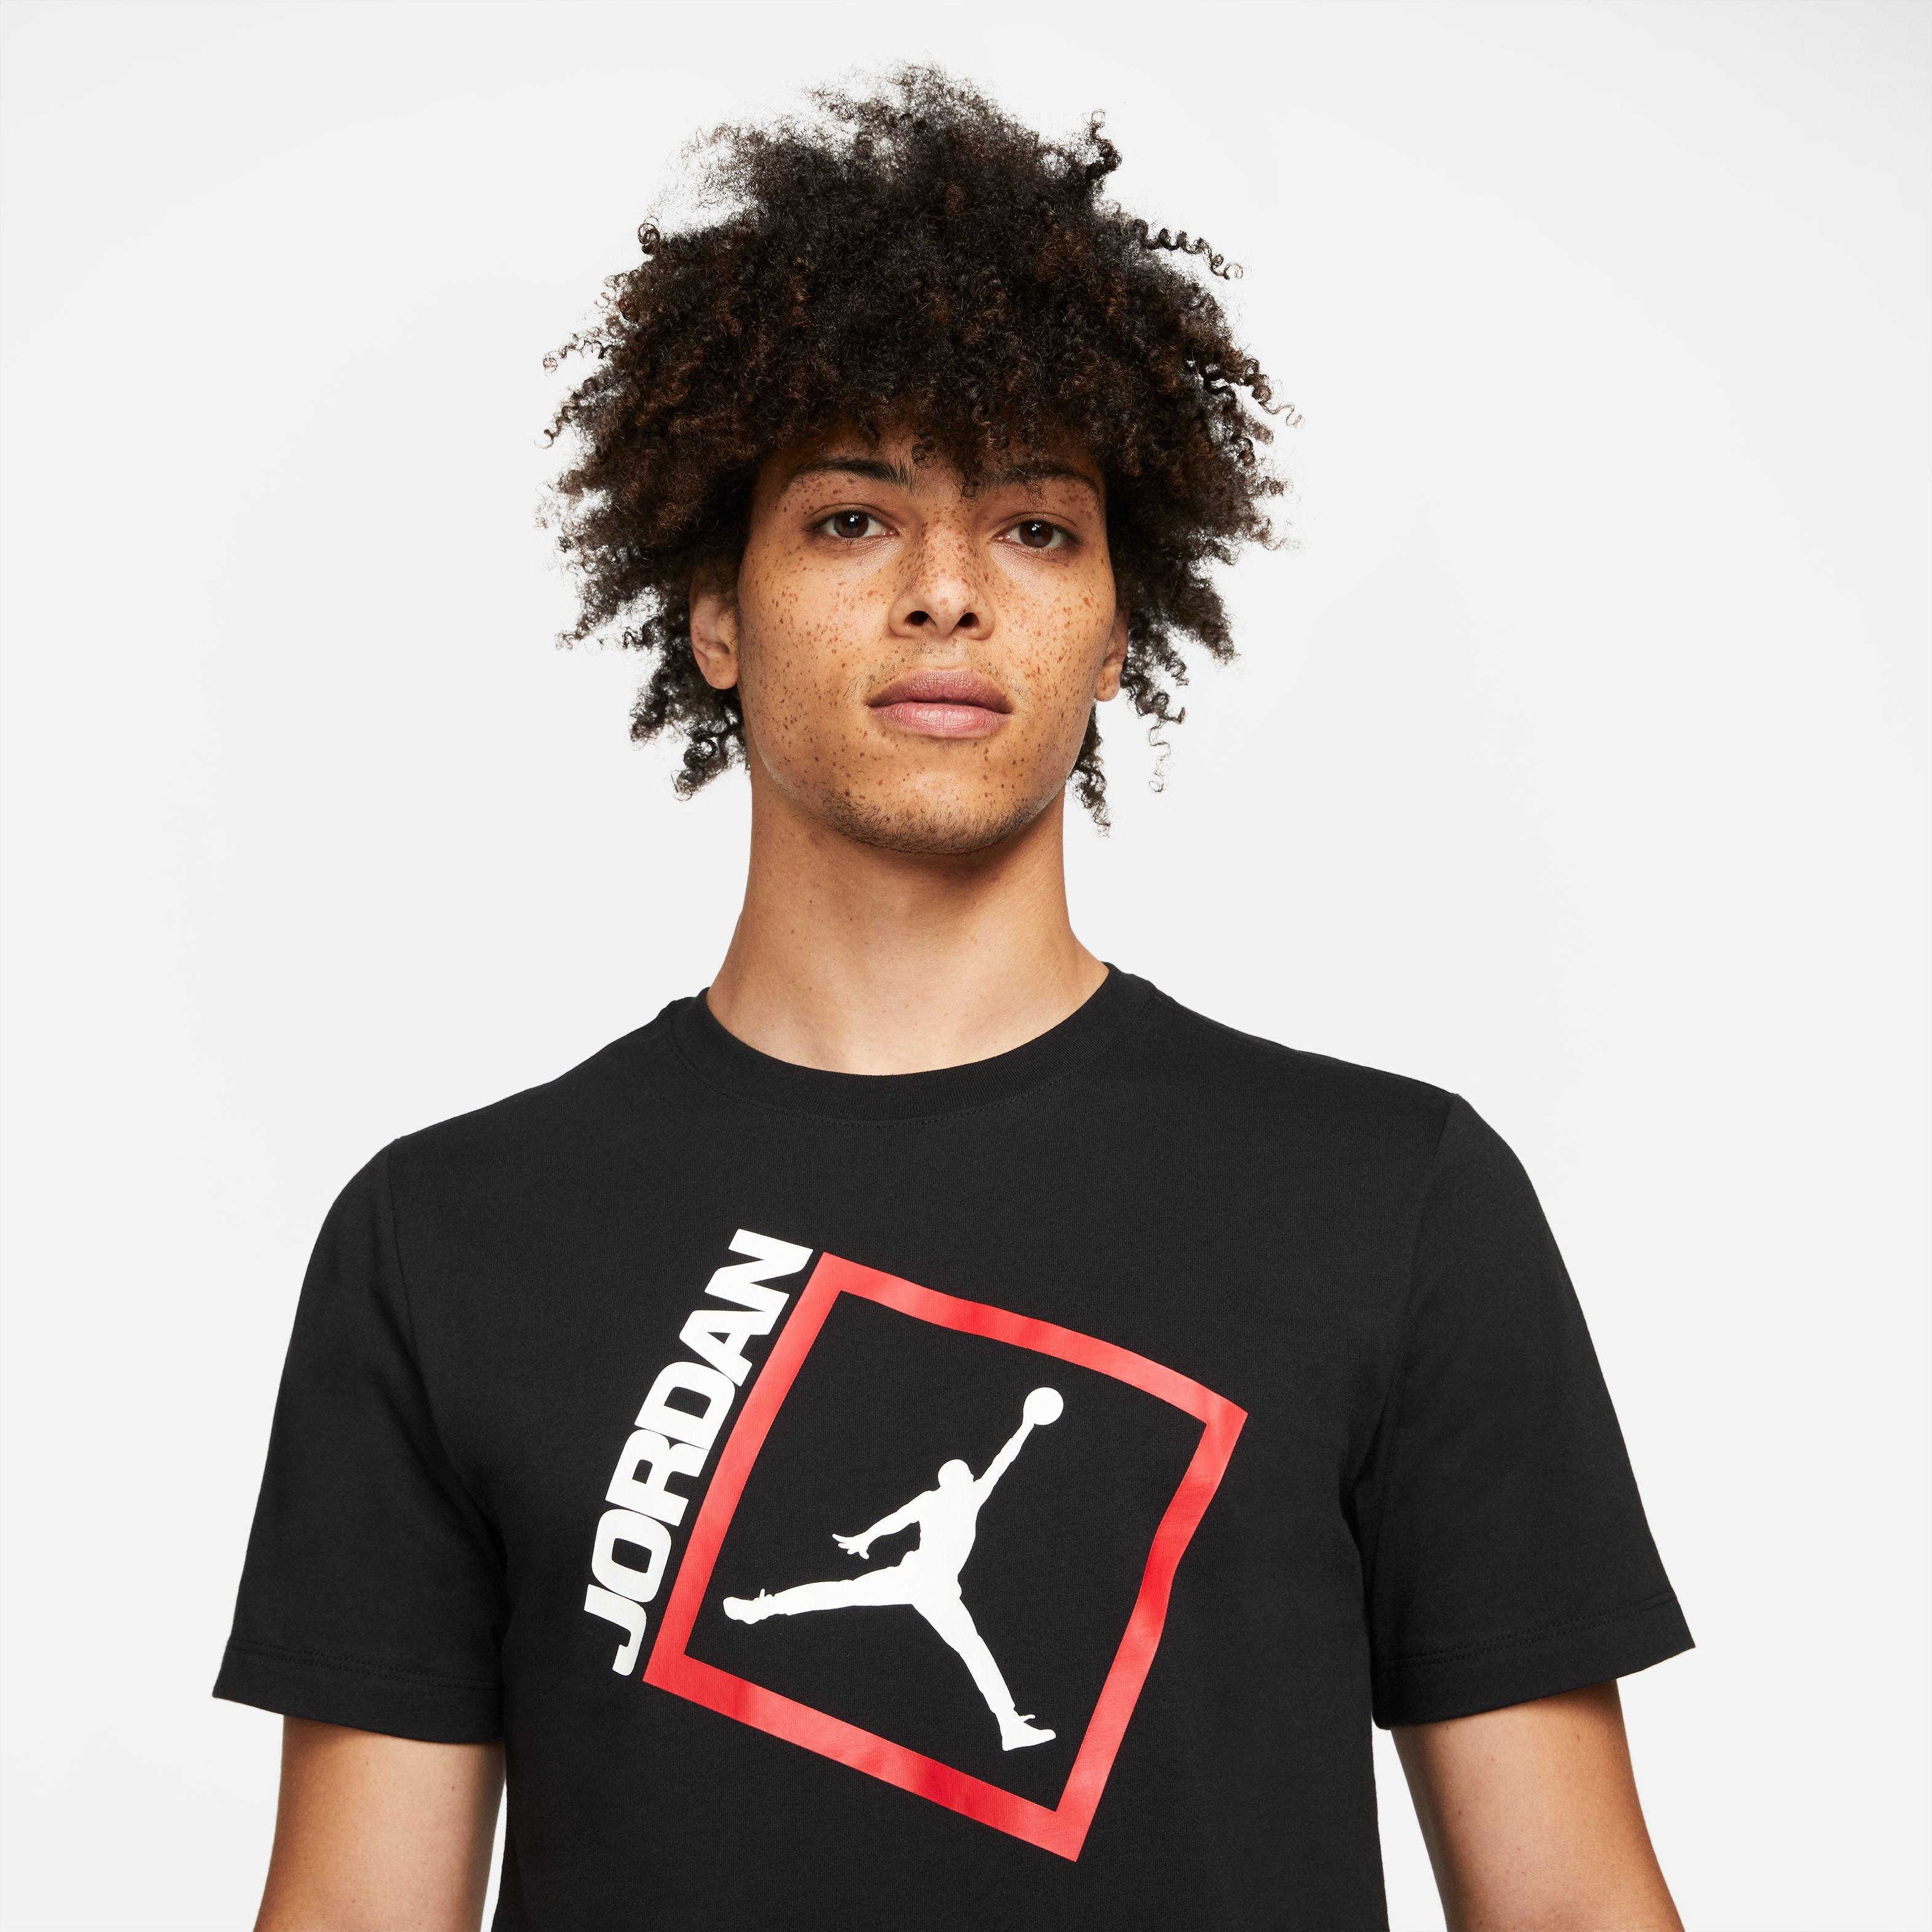 hibbett sports jordan shirts